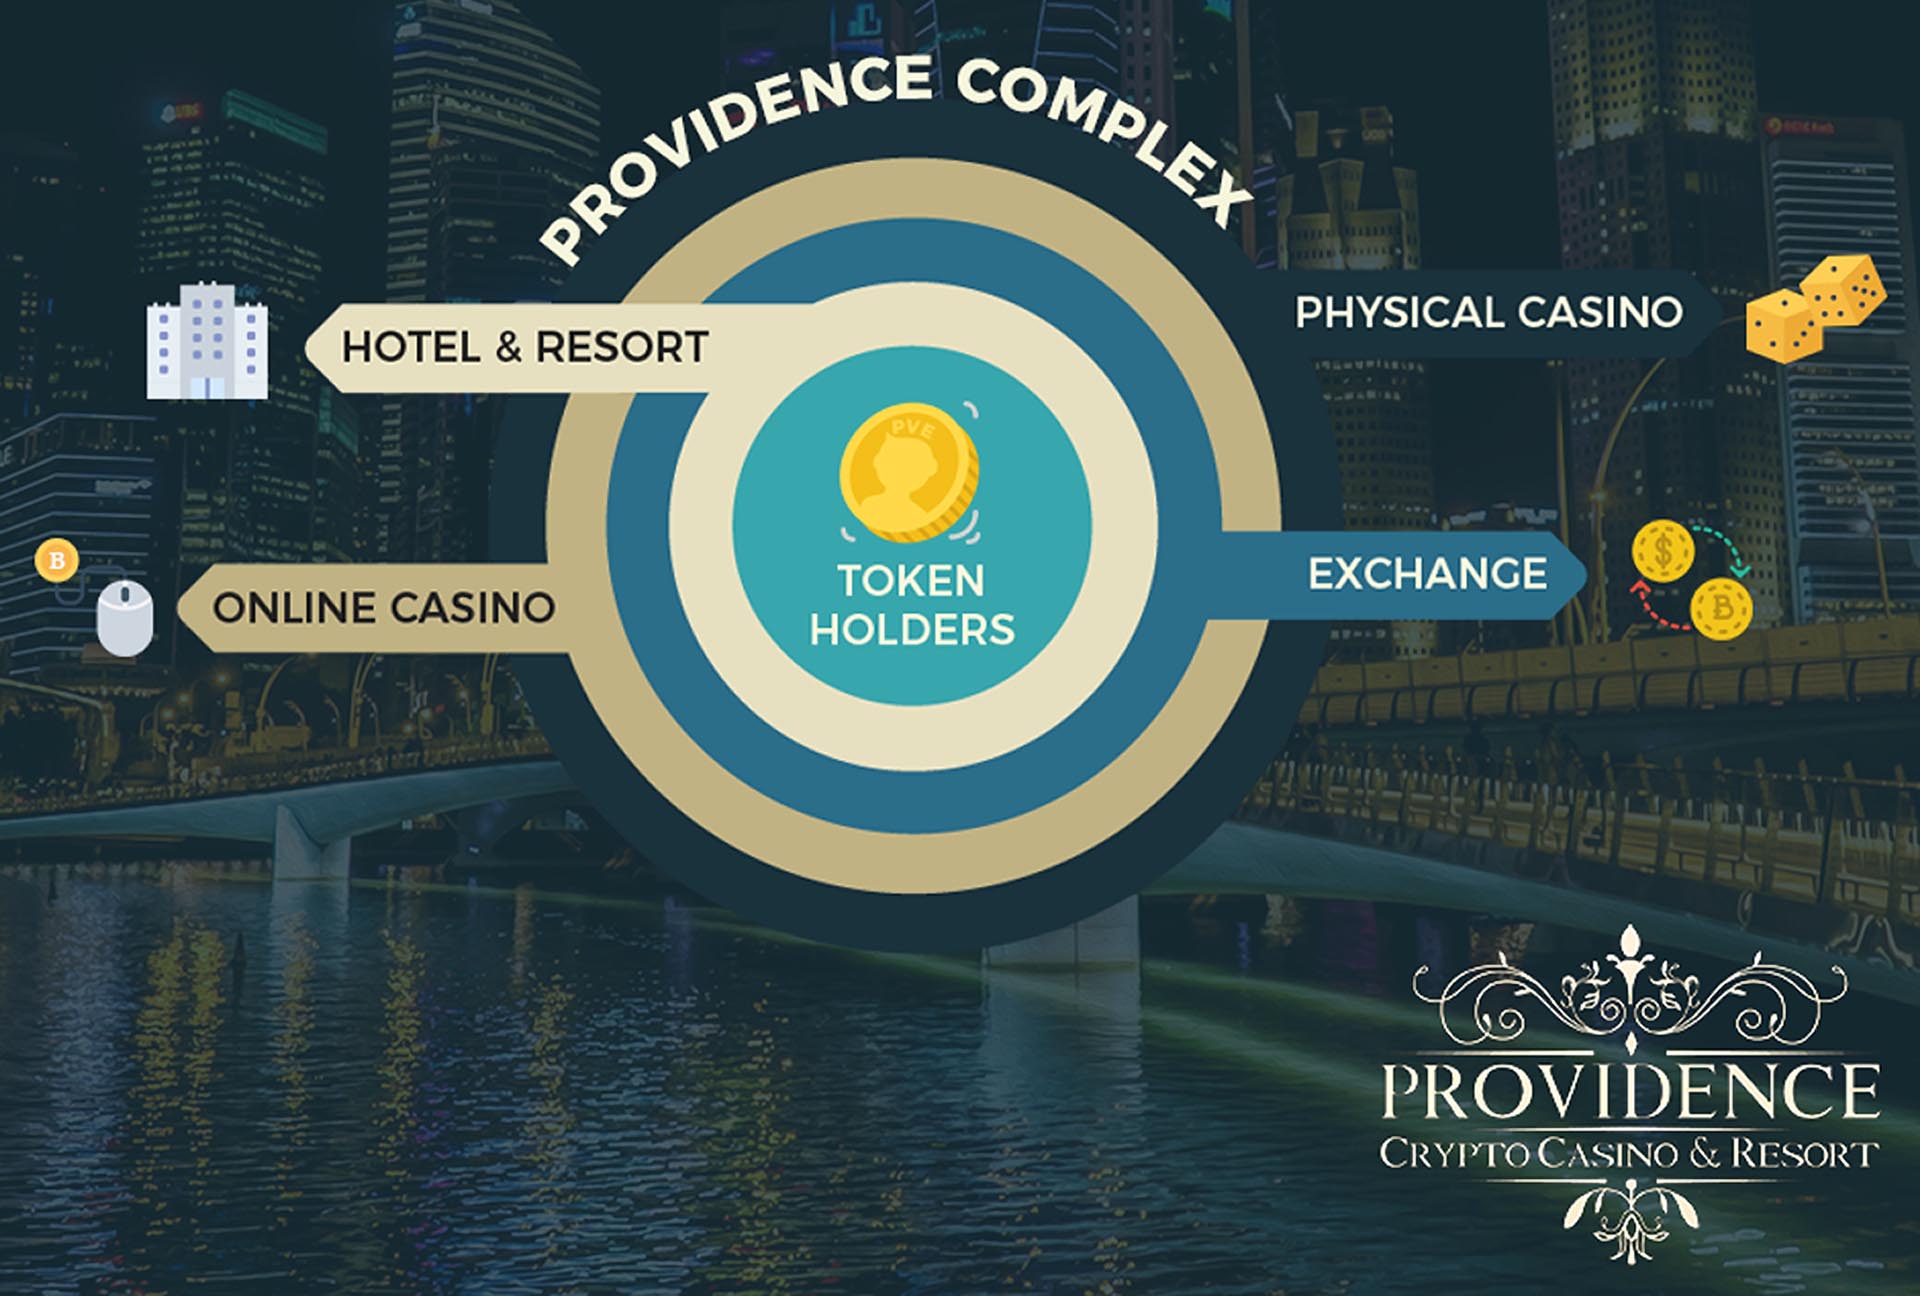 Providence - 100% Cashless Physical Casino and Resort